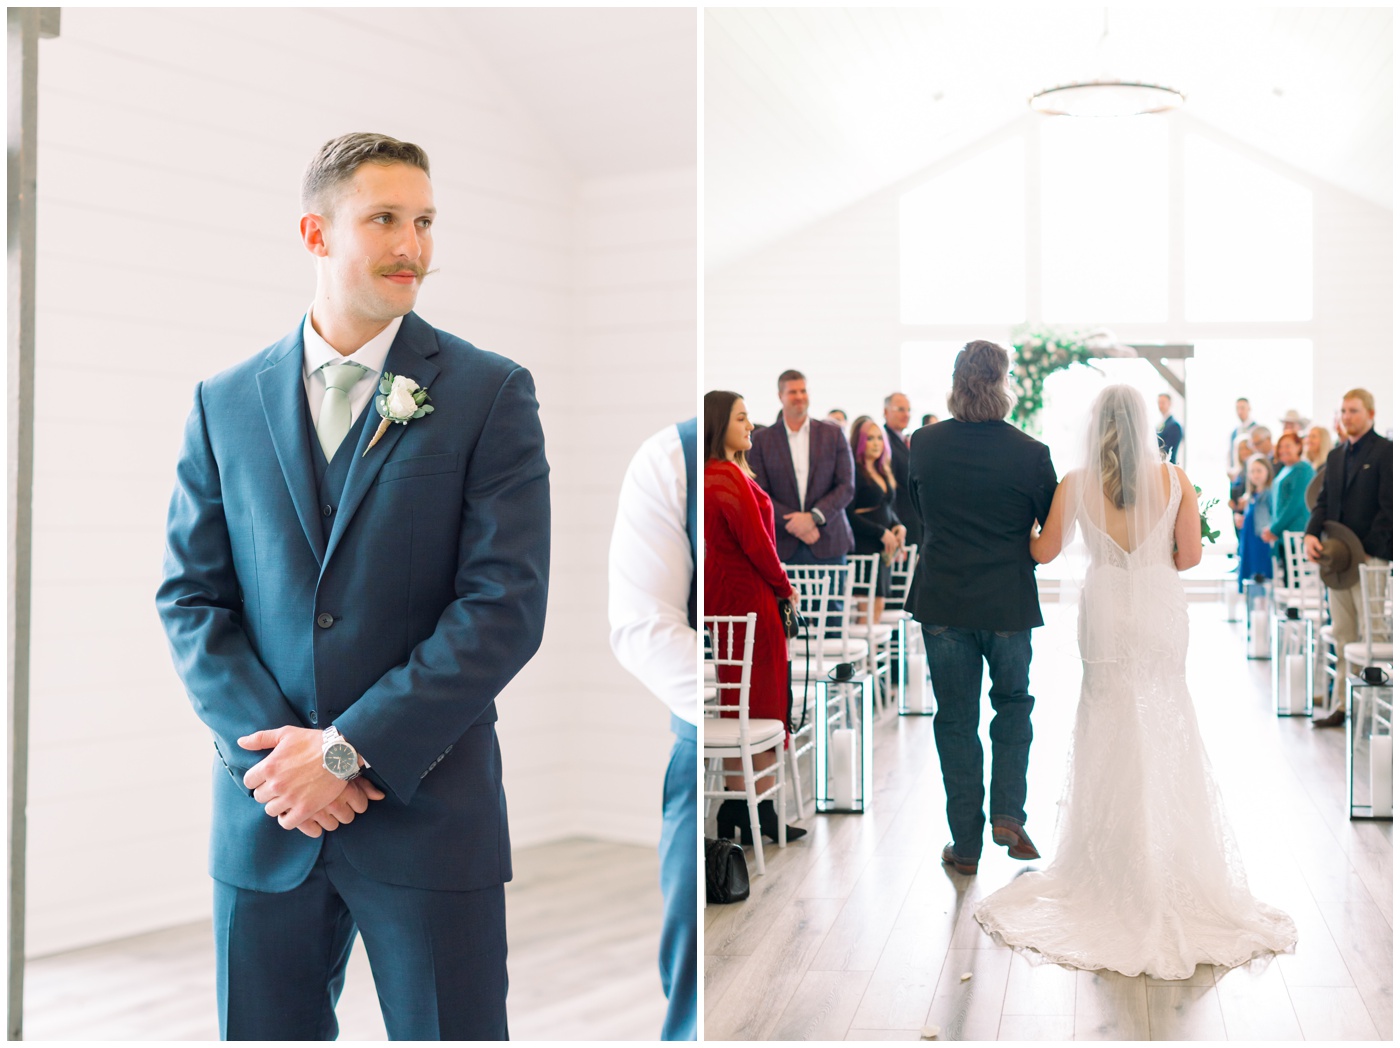 the groom looks in awe as his bride walks down the aisle